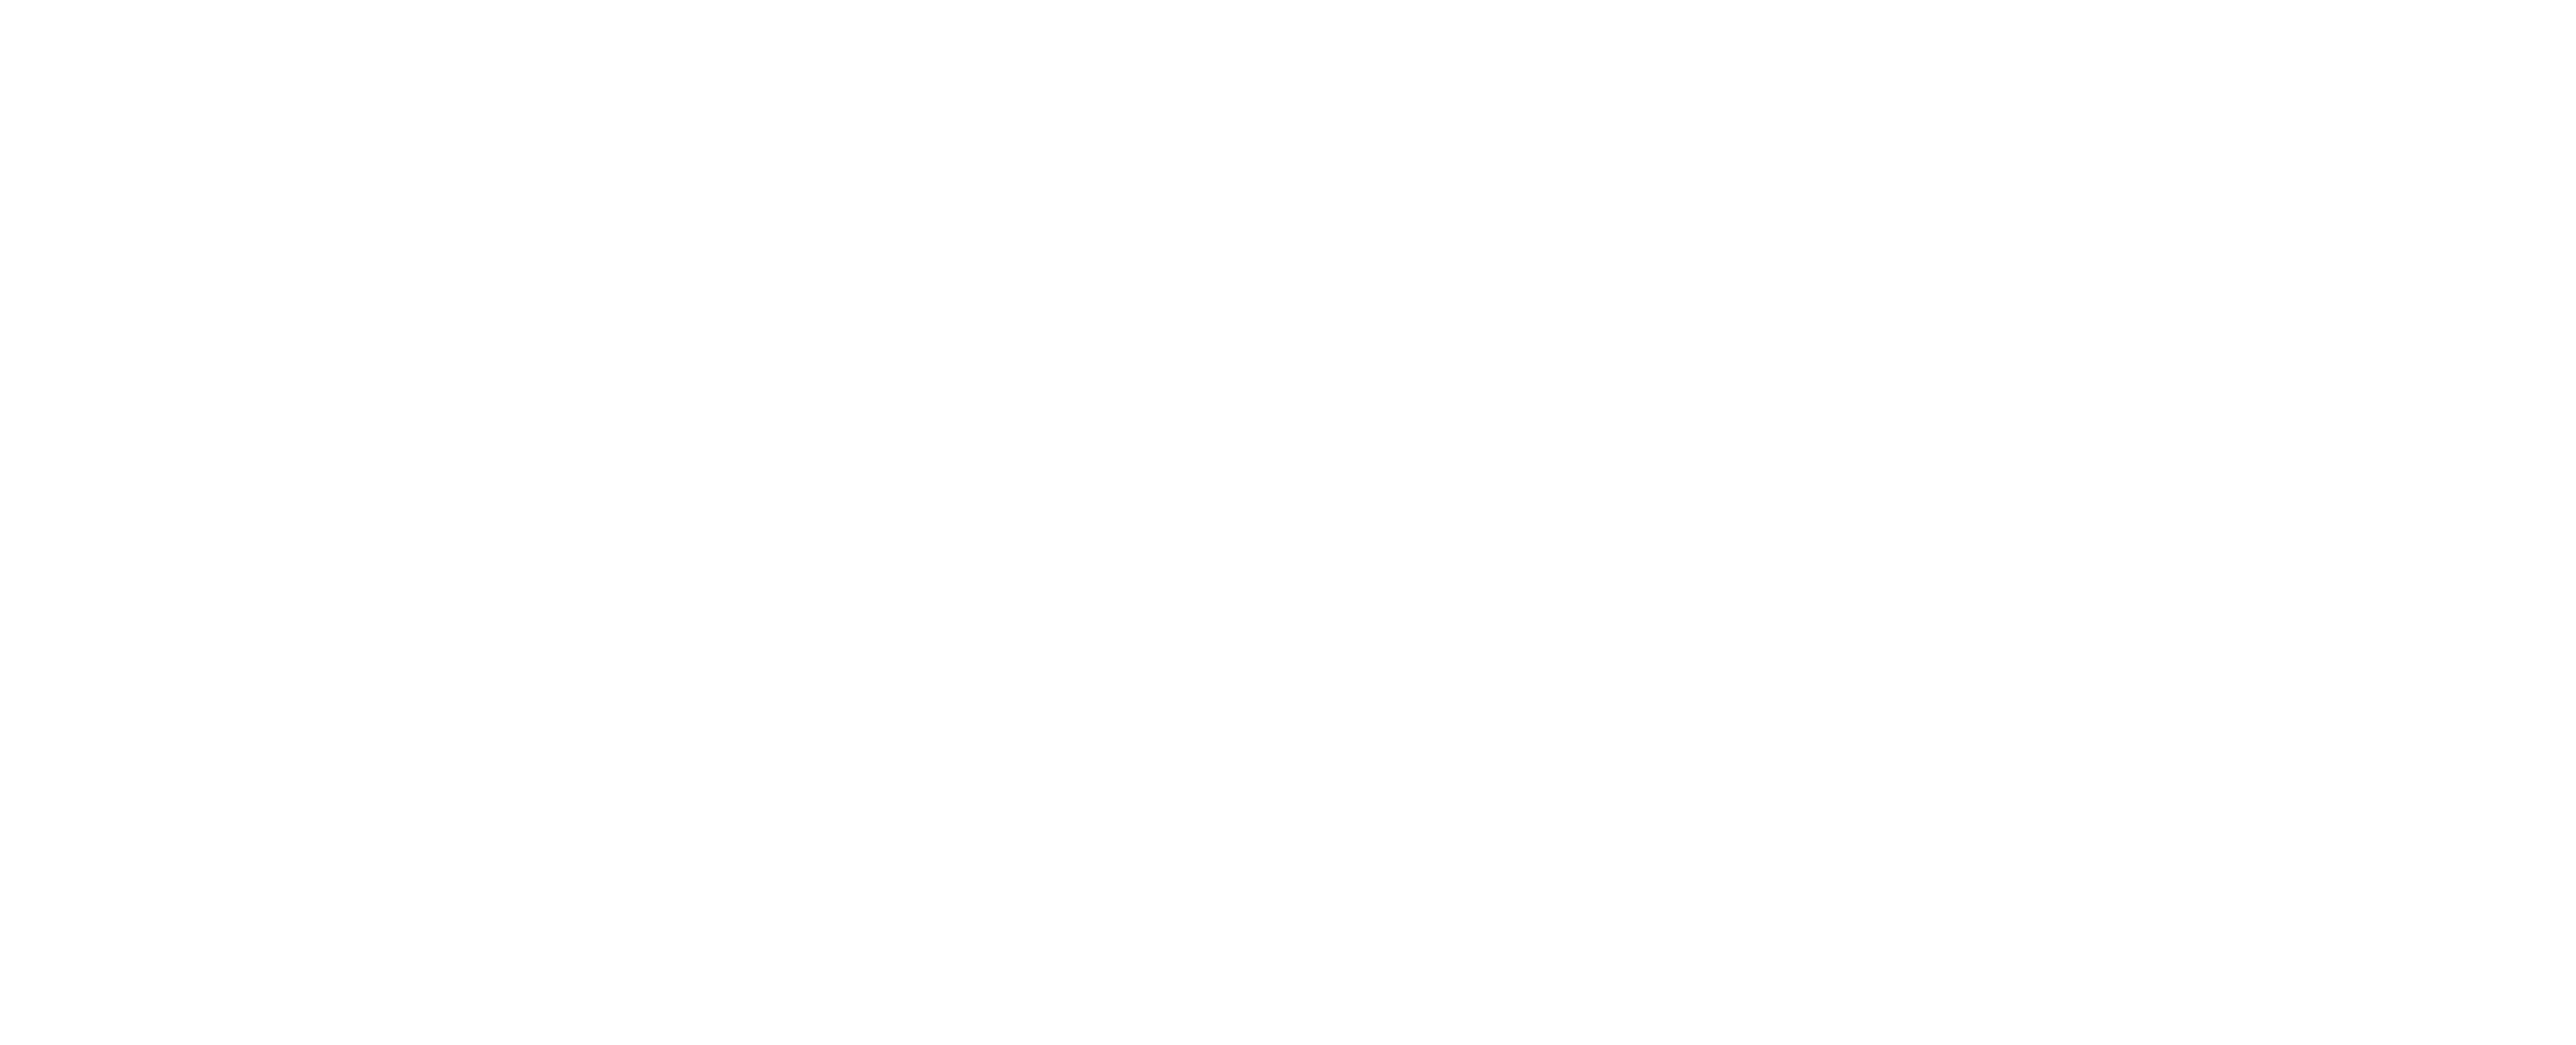 Mob Network logo